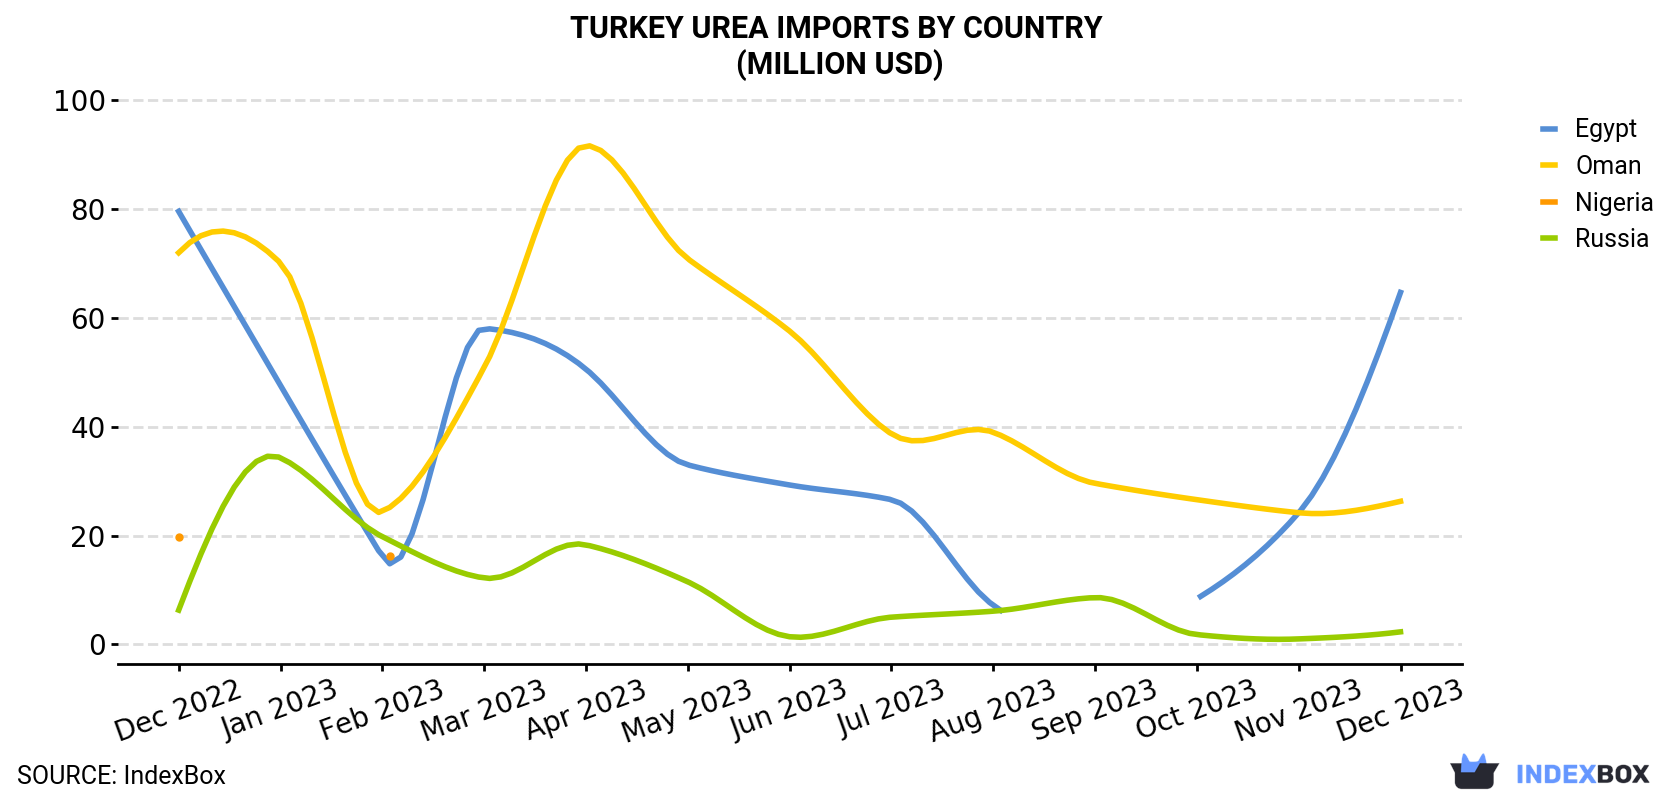 Turkey Urea Imports By Country (Million USD)